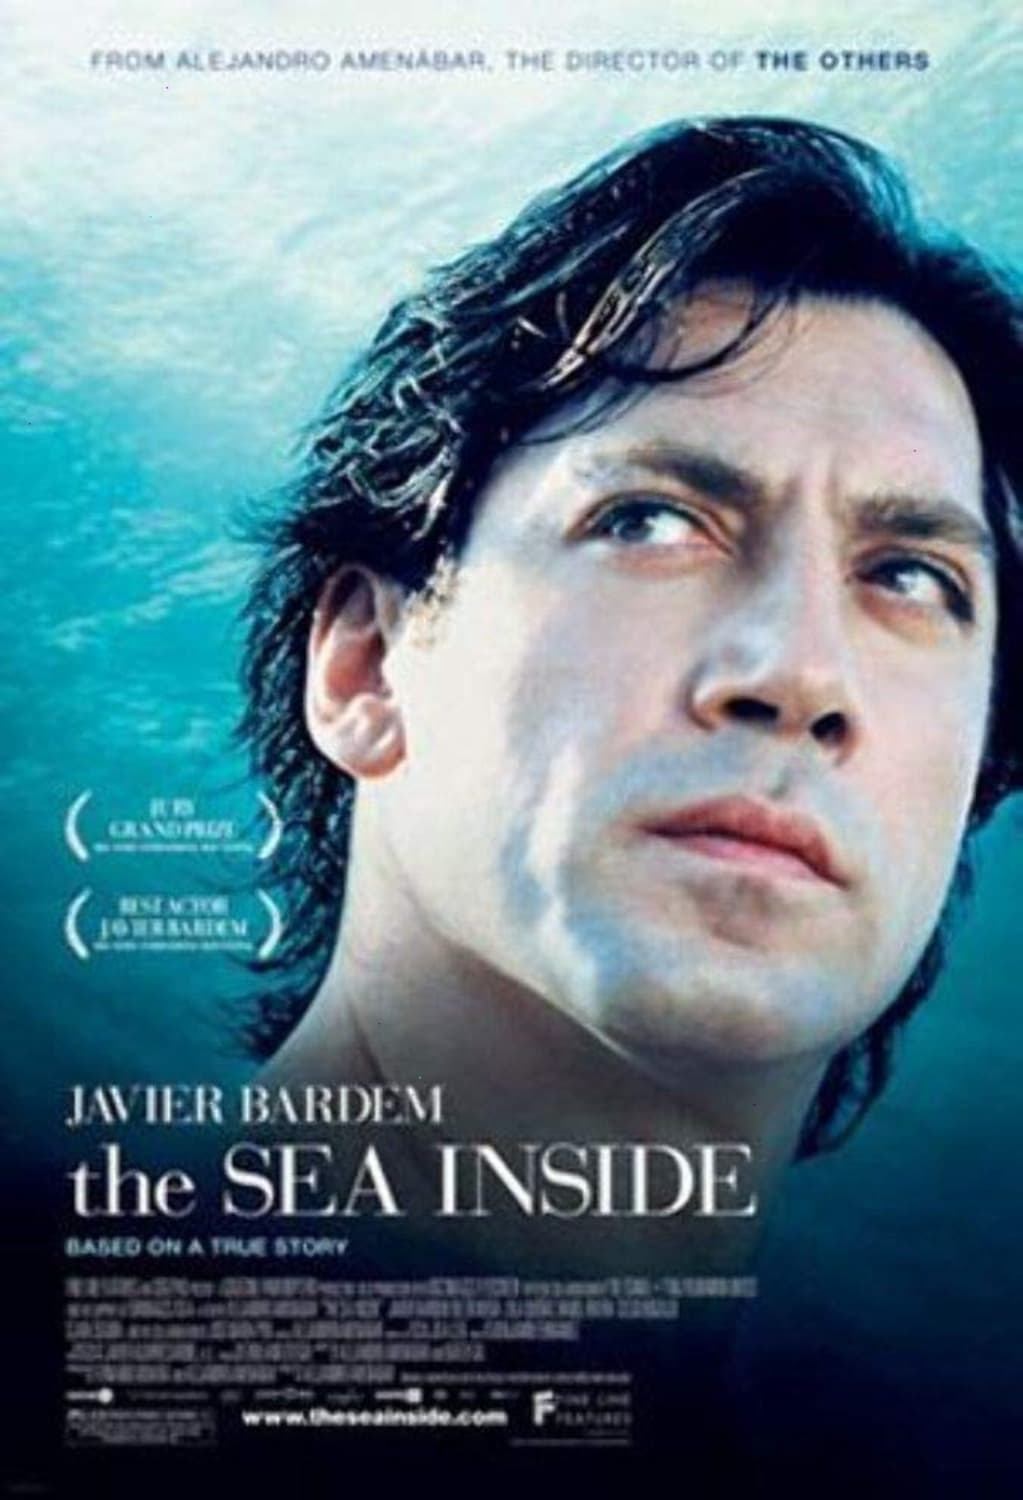 The Sea Inside (DVD) on MovieShack